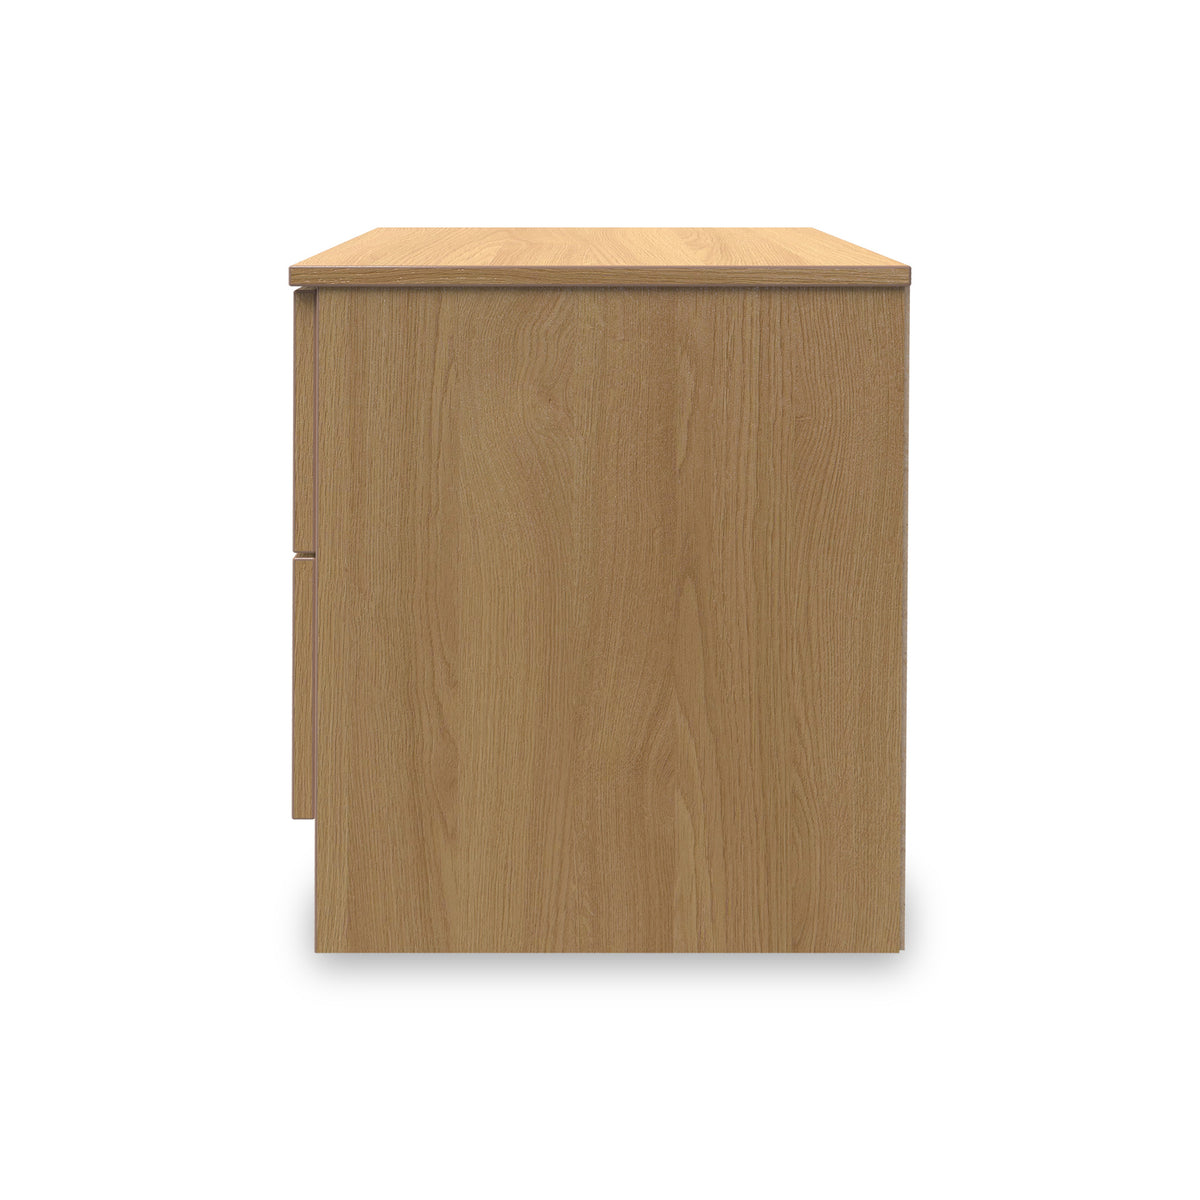 Kilgarth Modern Oak 2 Drawer Bedside Table by Roseland Furniture